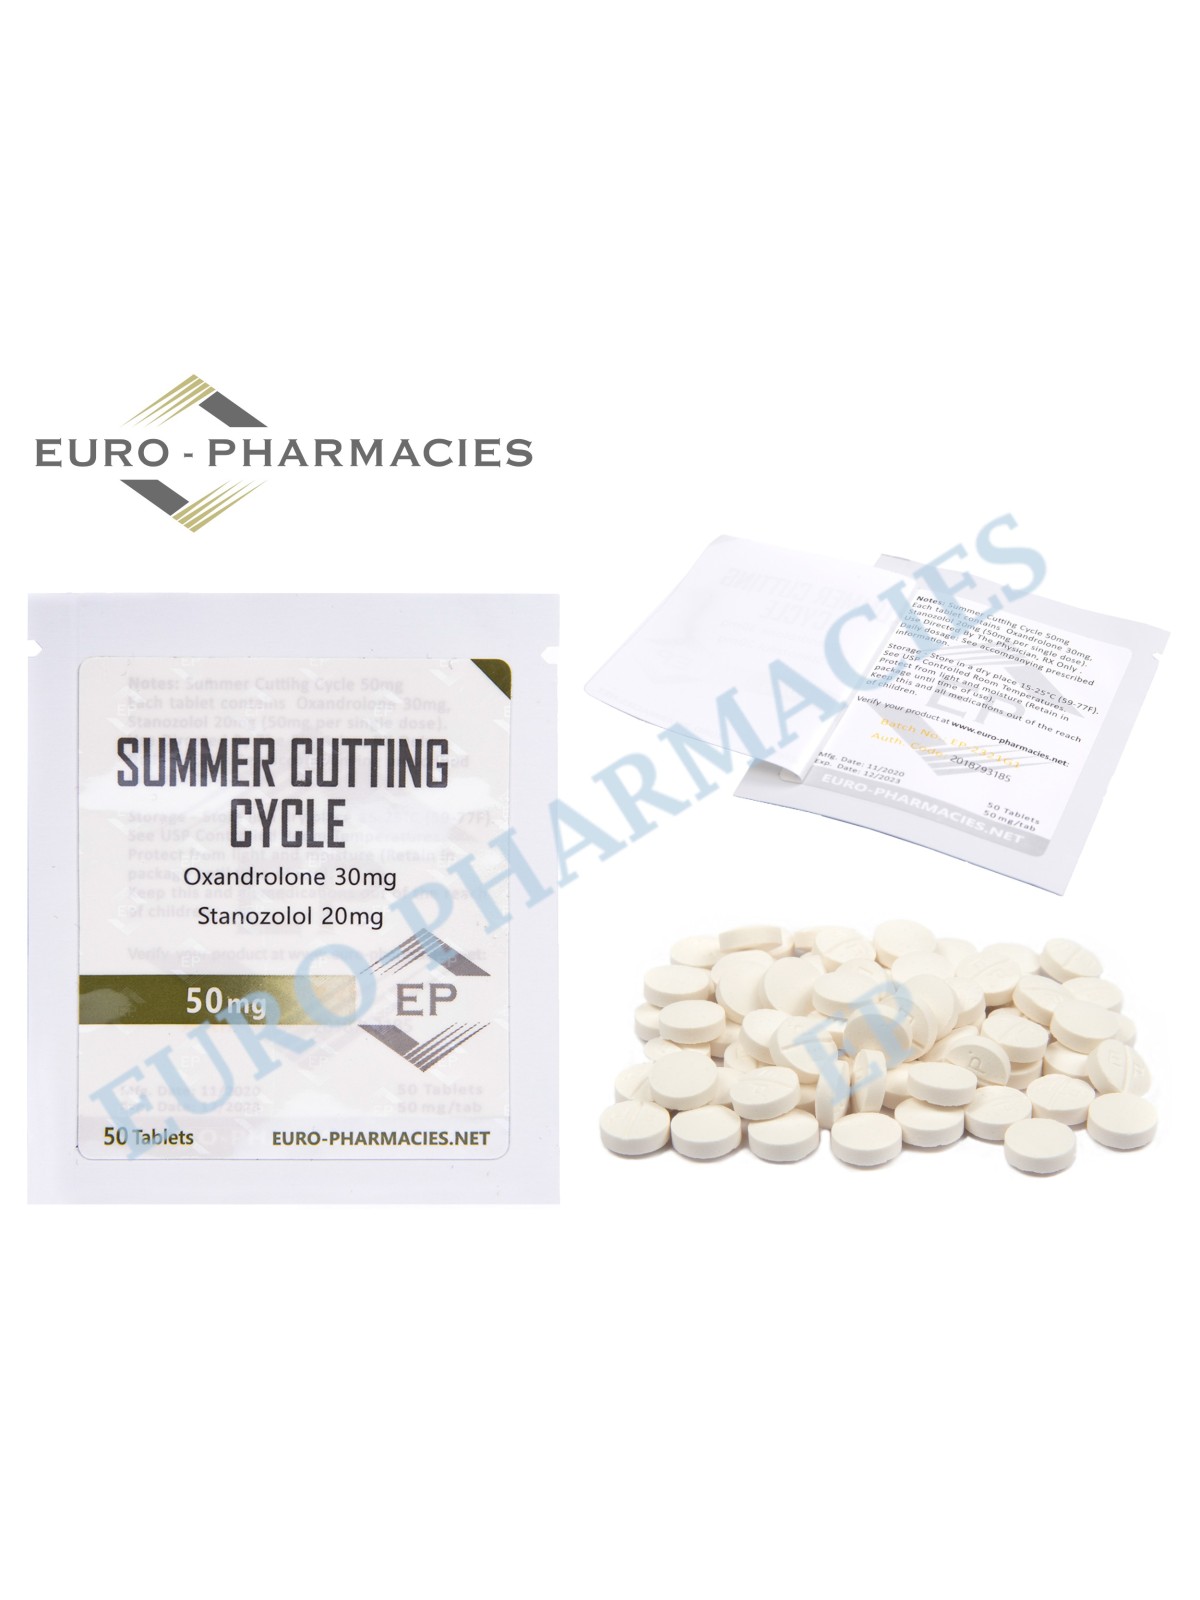 Summer Cutting cycle ( 20 mg winstrol + 30mg anavar)  -50mg/tab 50 Tabs/bag - EP - USA